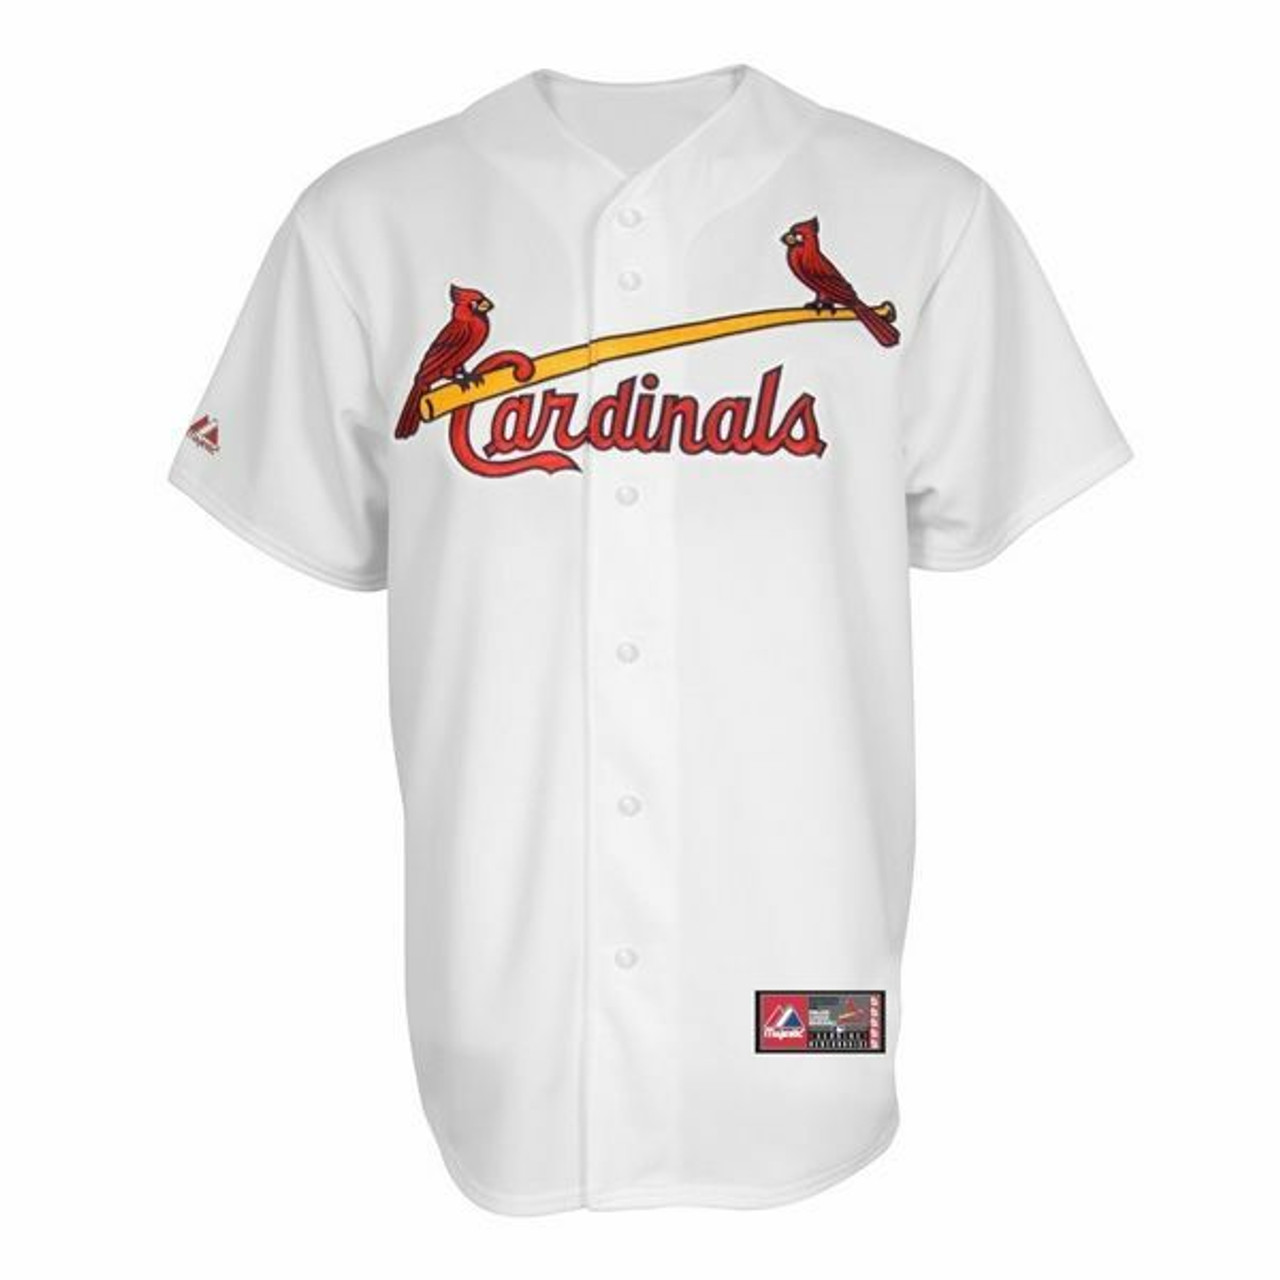 St. Louis Cardinals Accessories in St. Louis Cardinals Team Shop